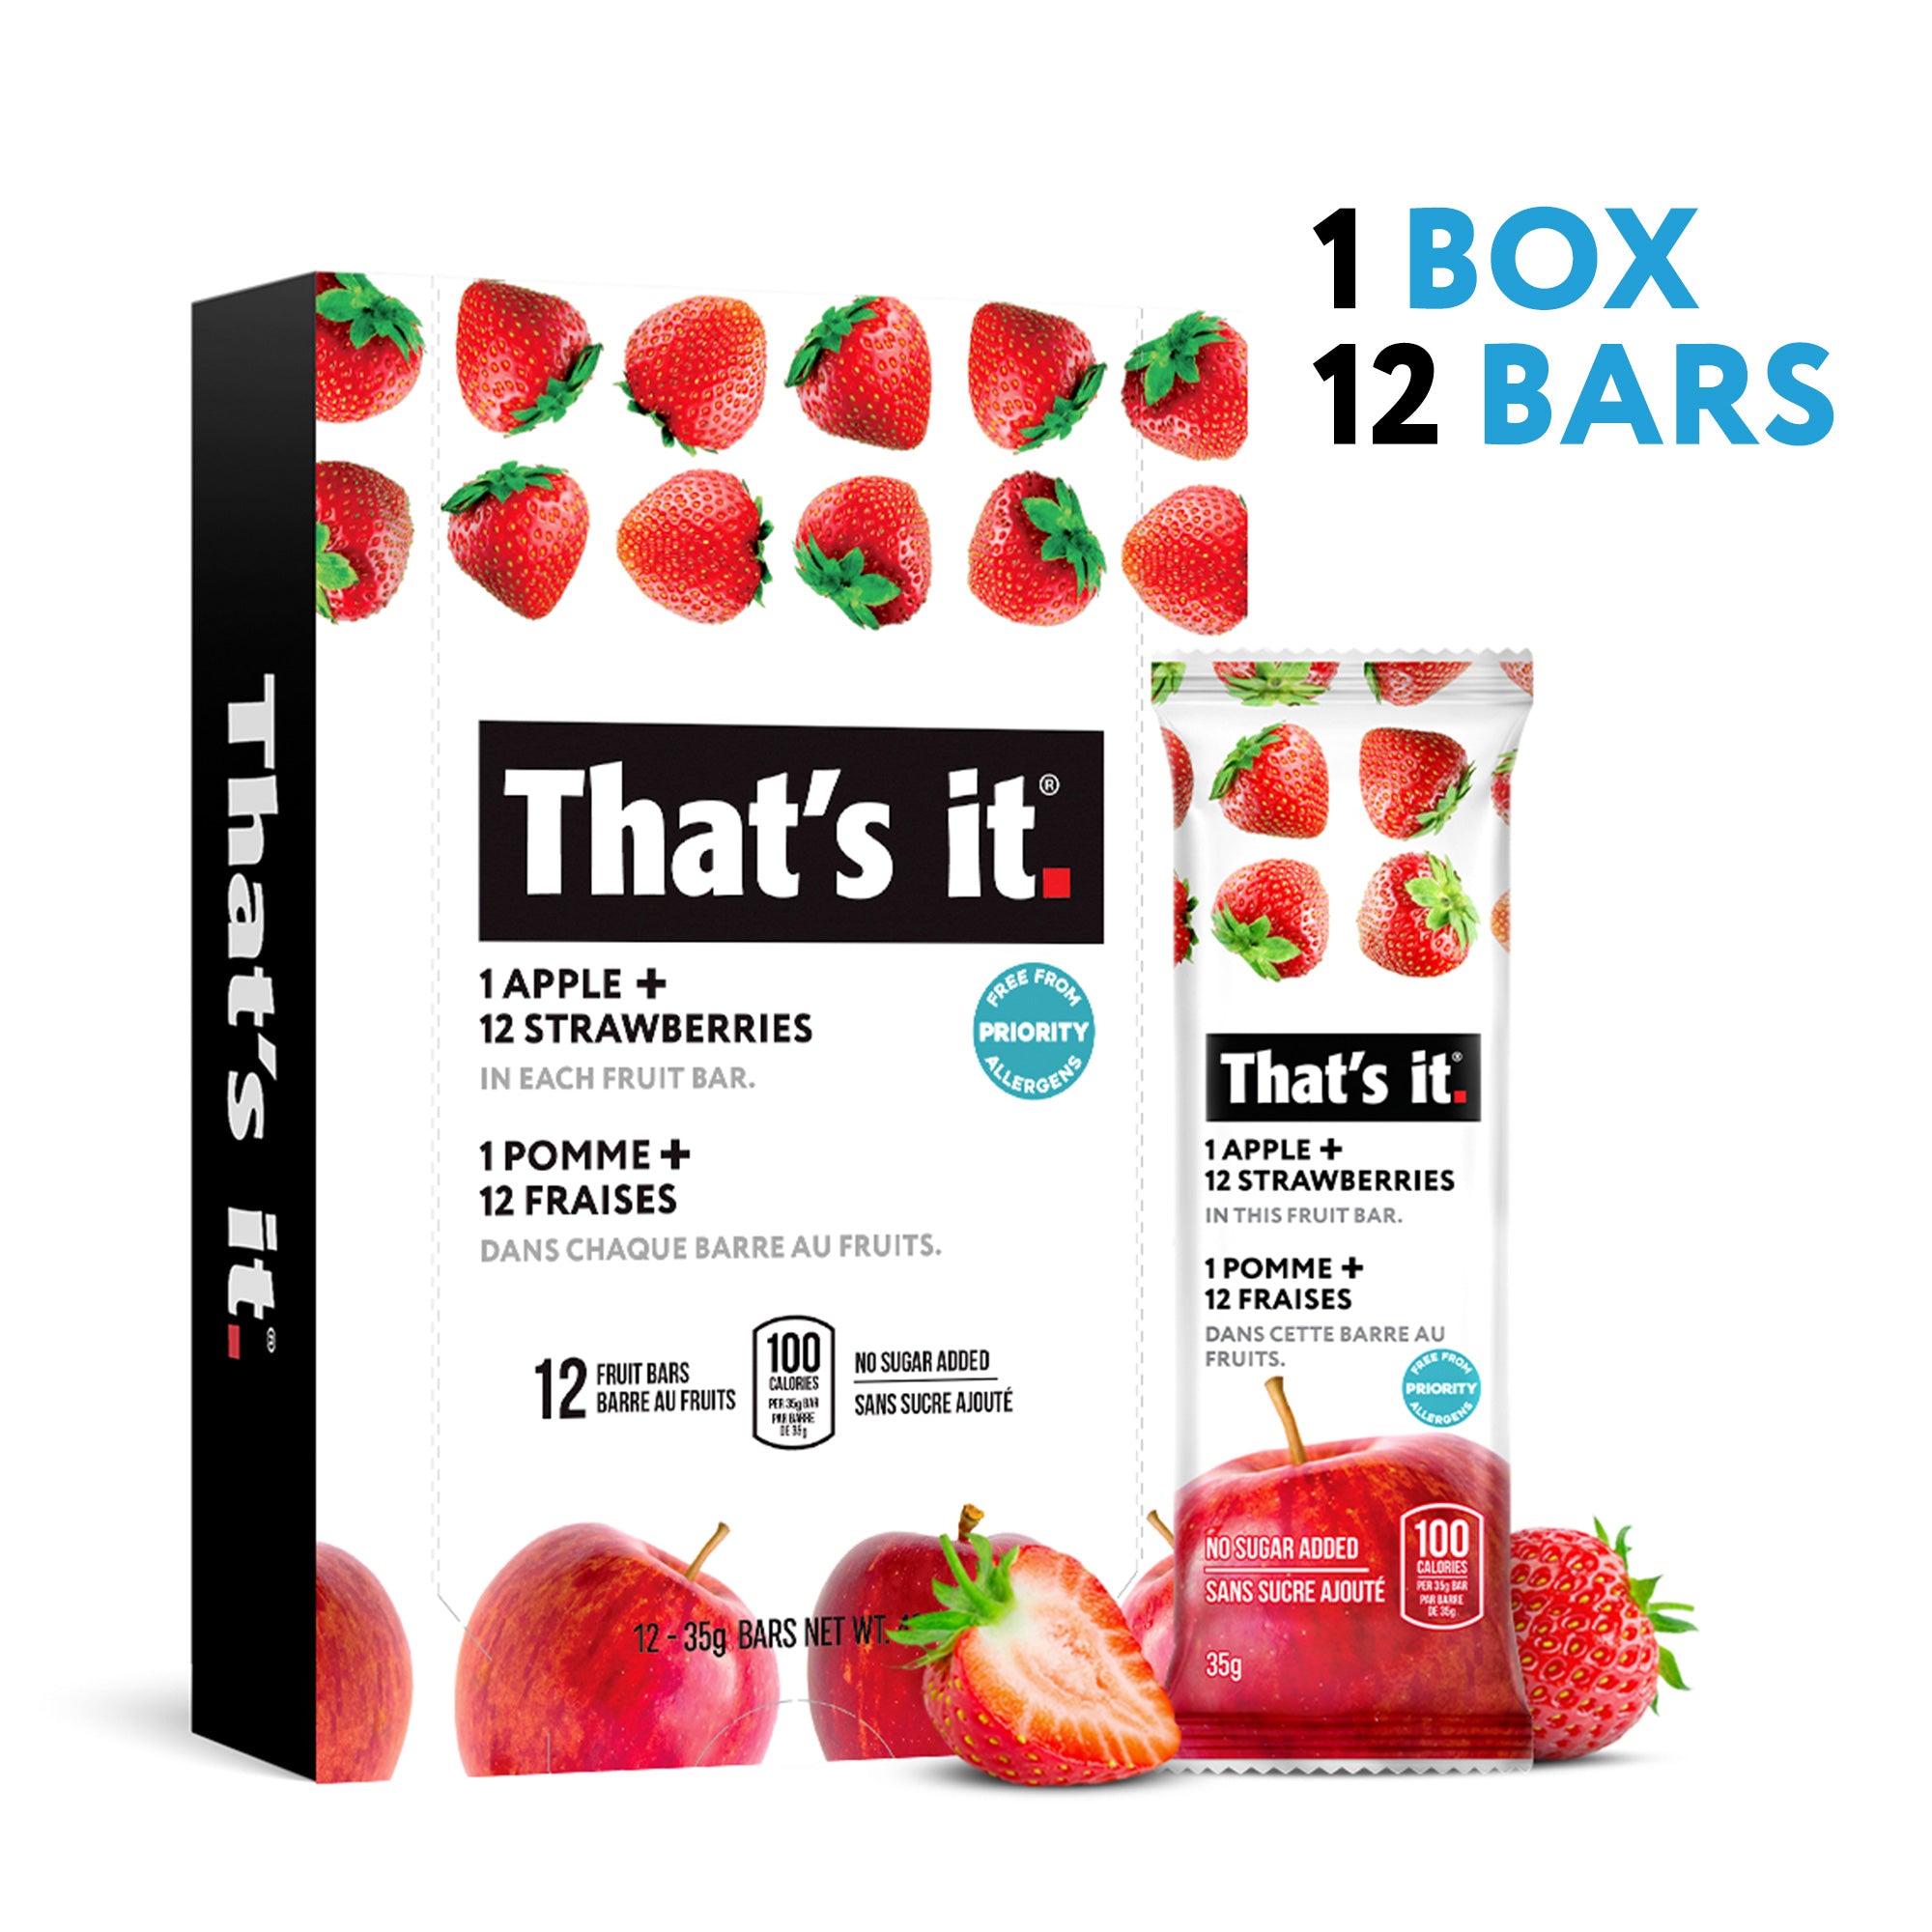 1 box 12 bars. 12 cr box of Apple + Strawberry fruit bars